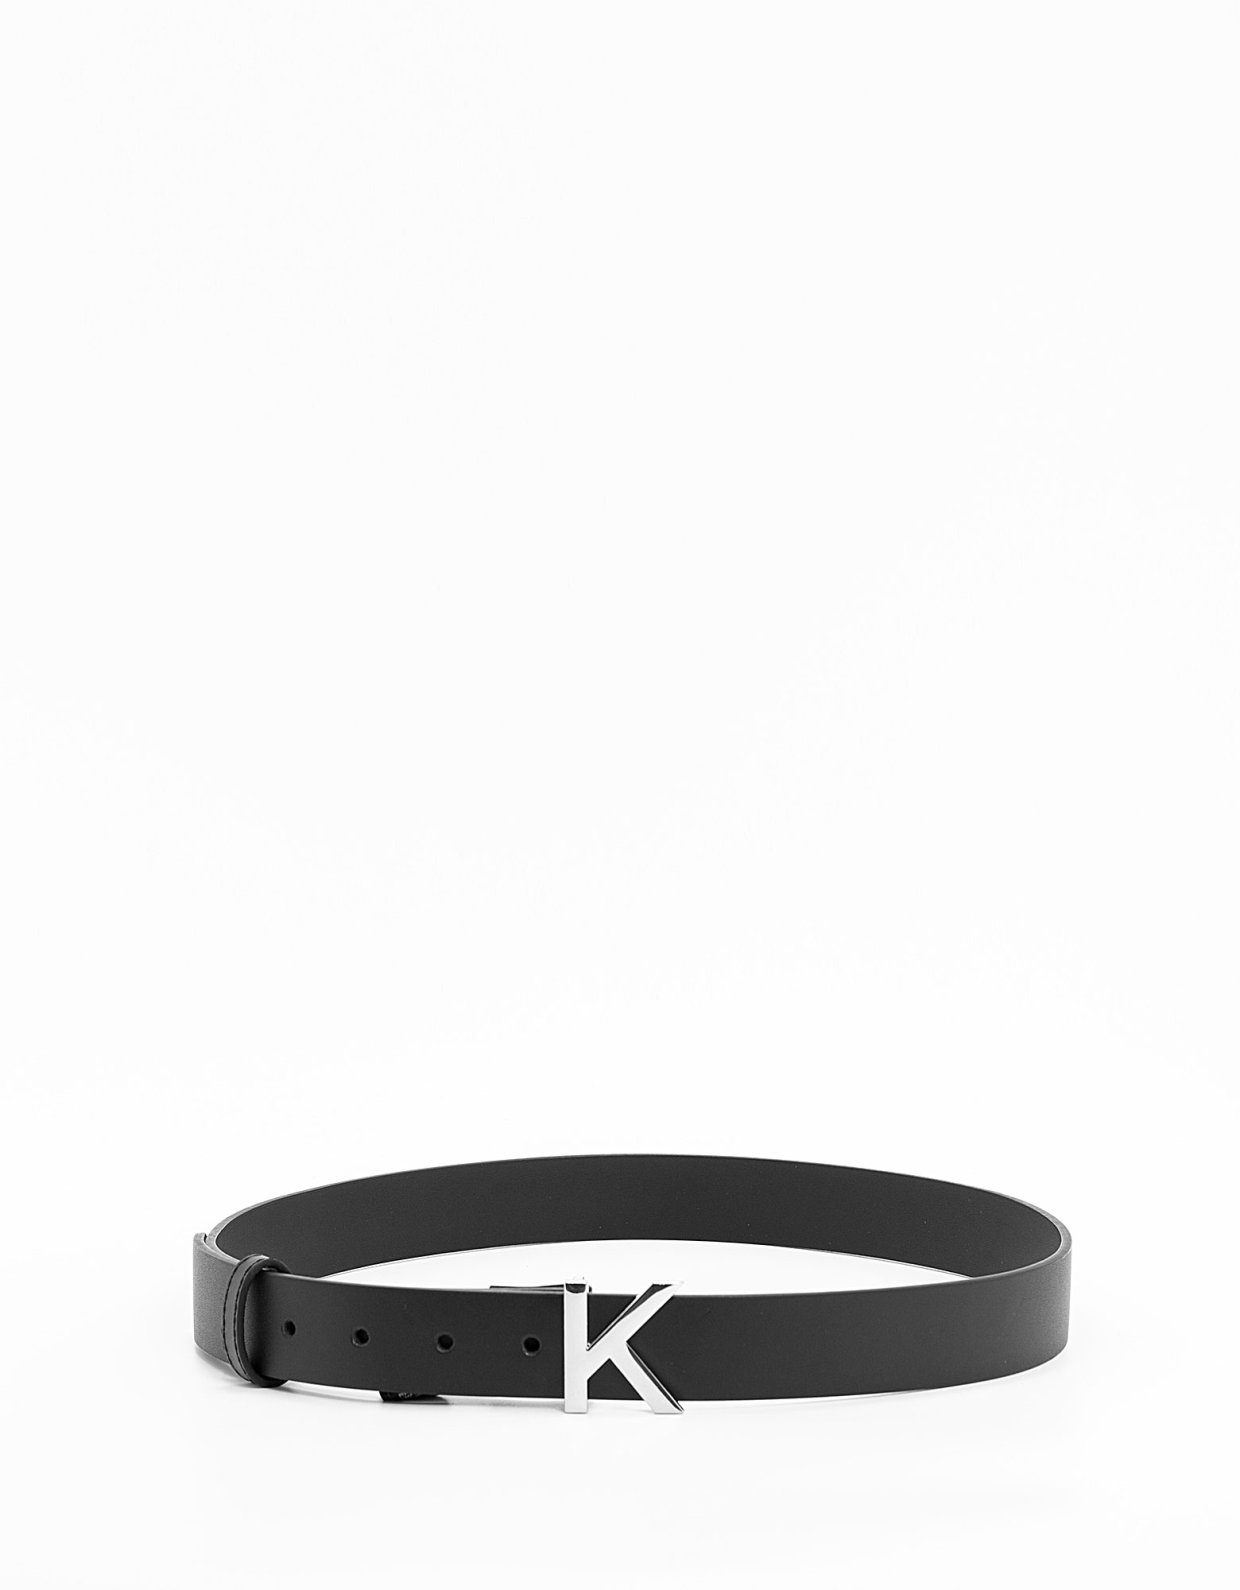 Kendall + Kylie Leather soft KK belt black